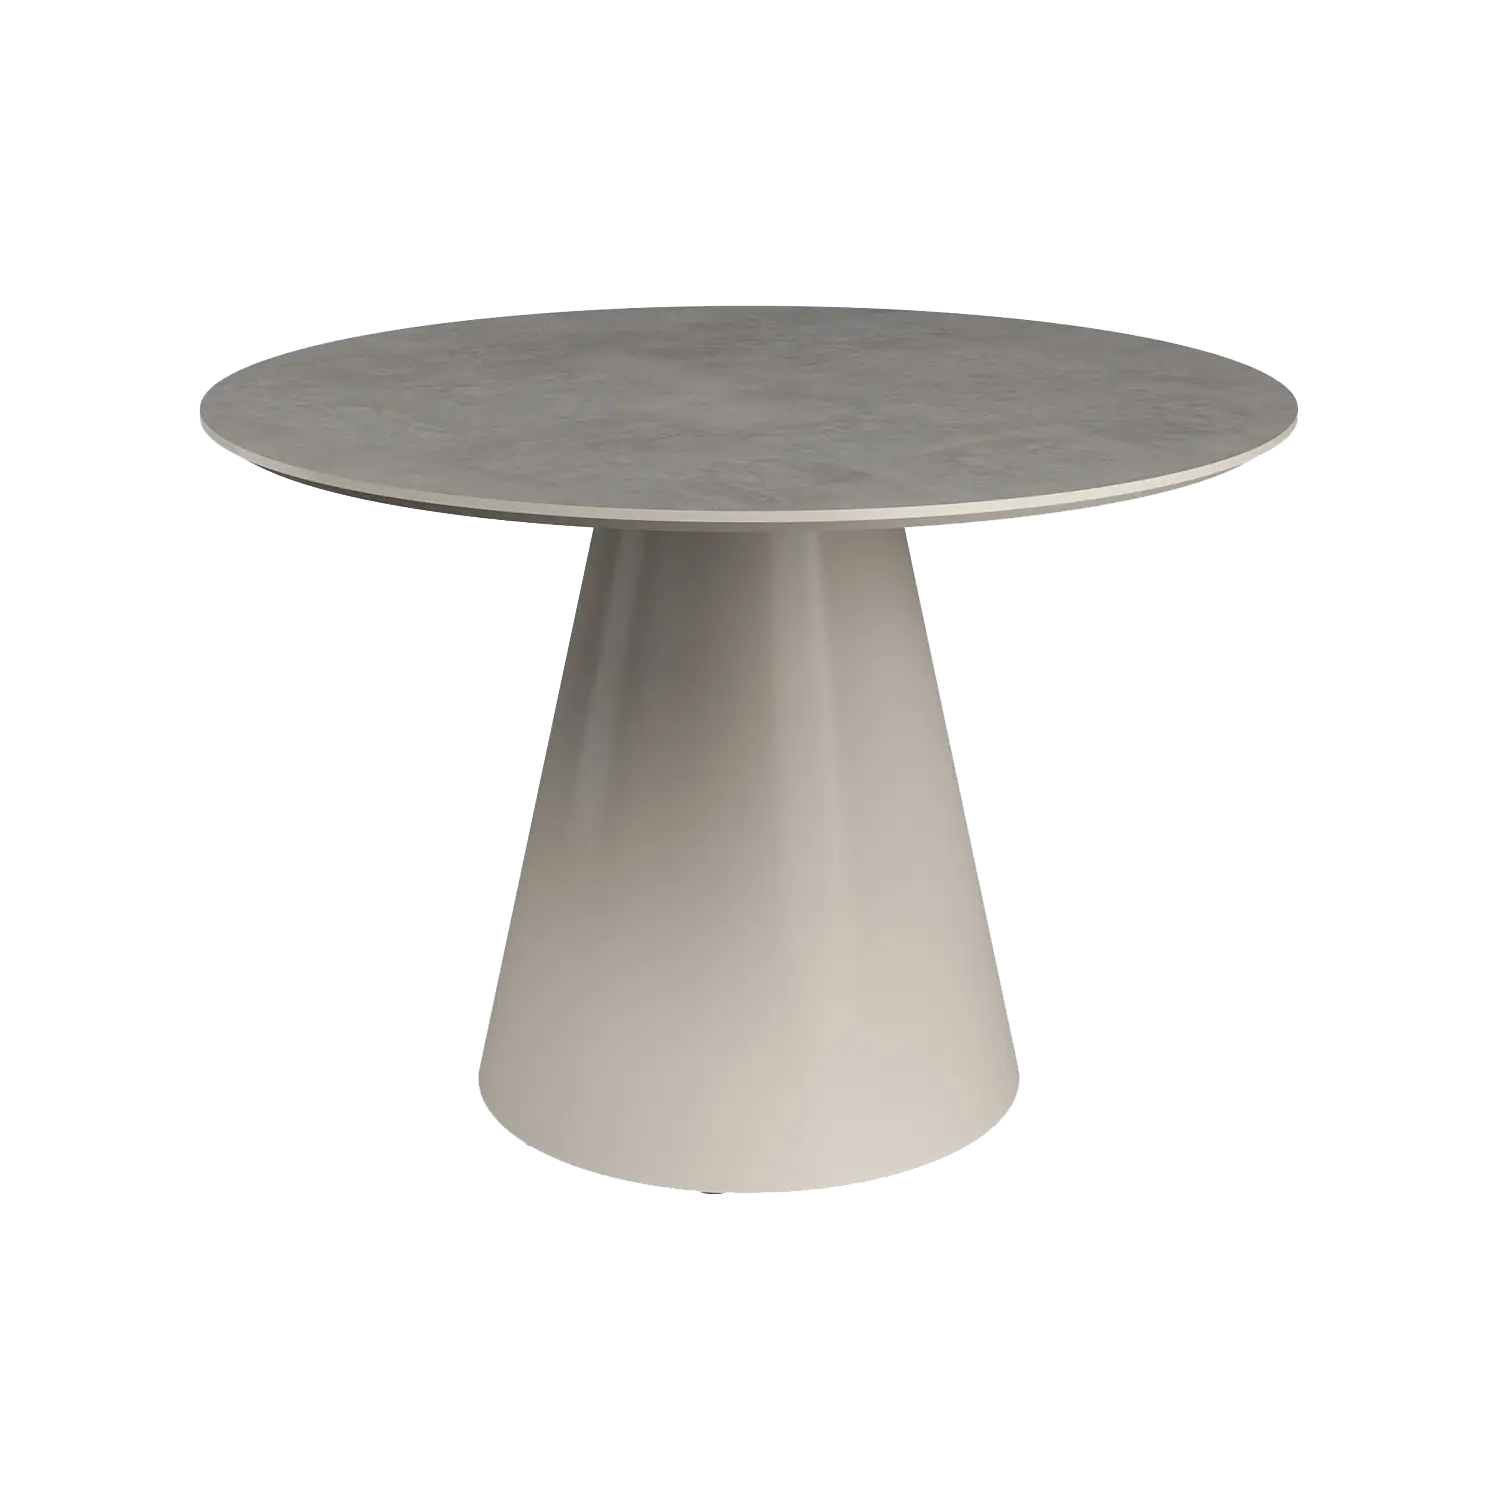 Ria 120cm Round Light Grey Melamine Dining Table